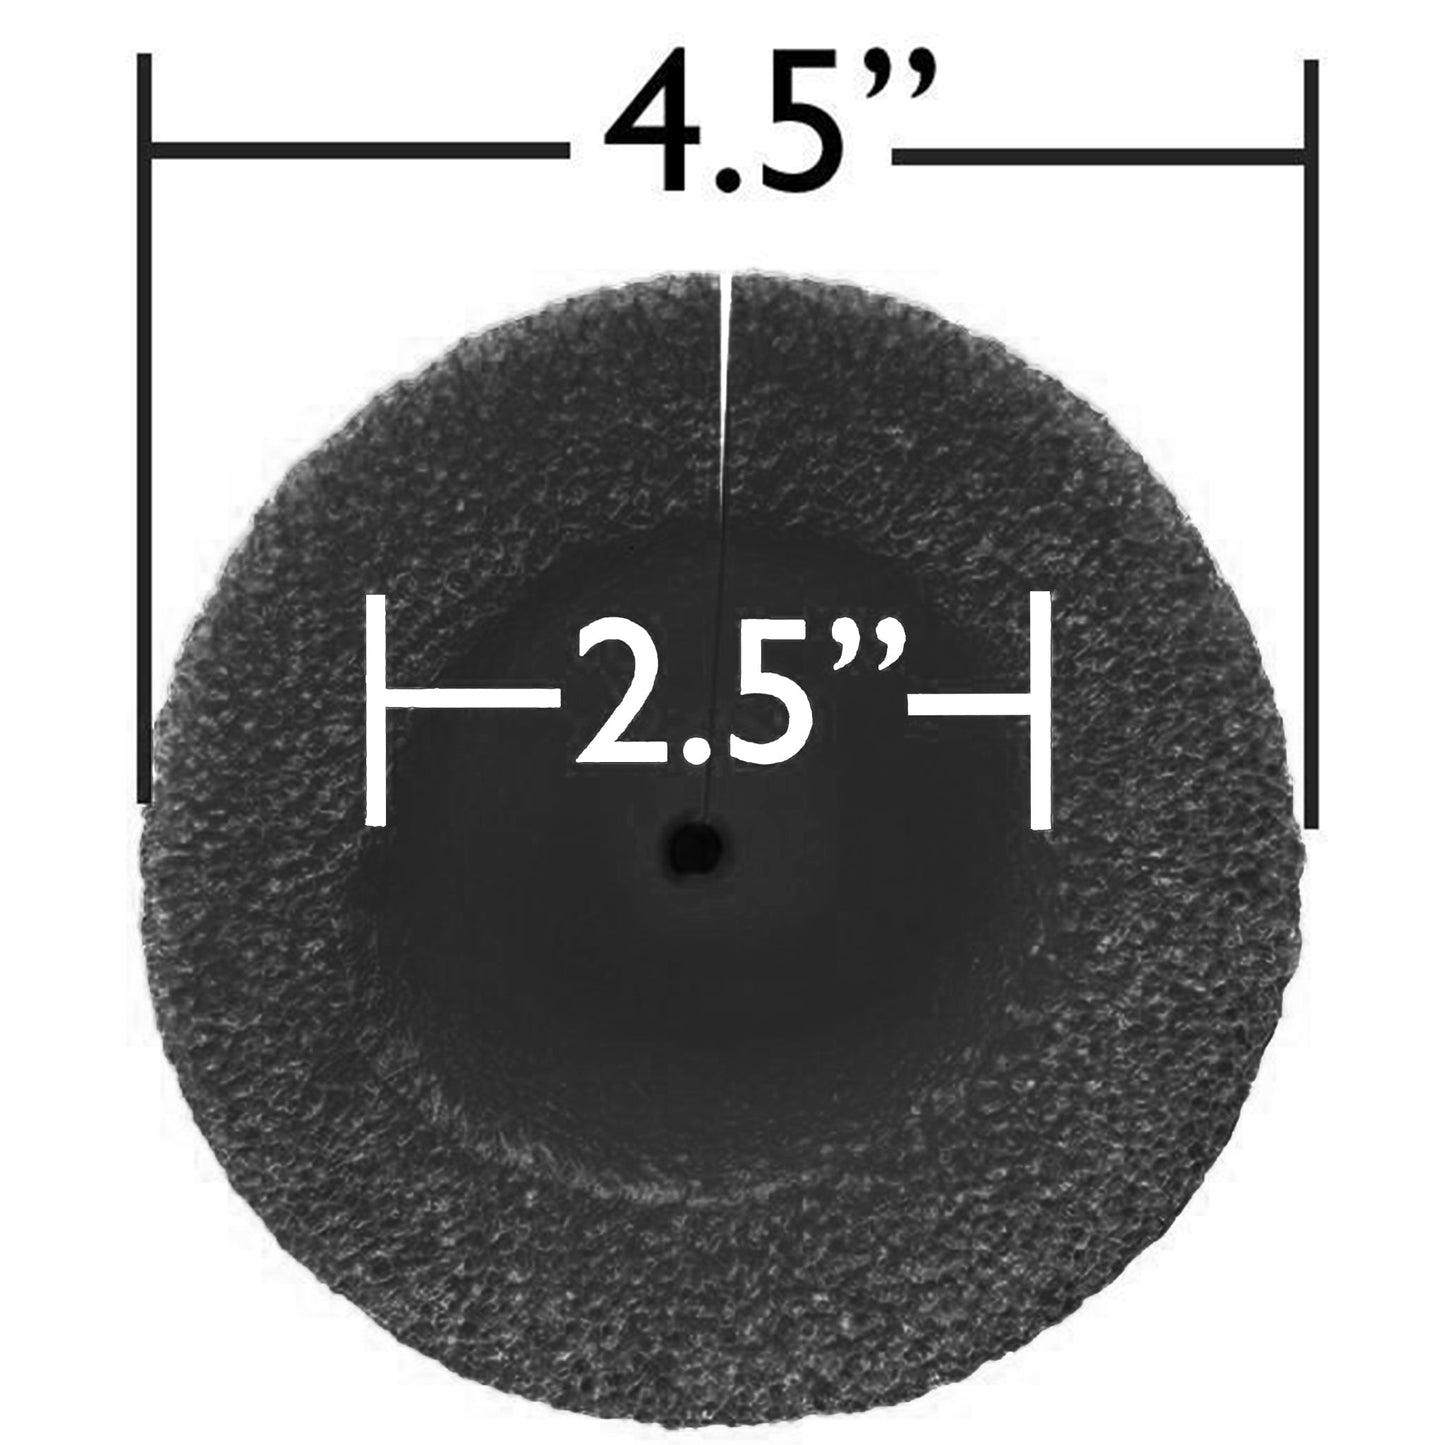 Large Clamp Foam Black- One, Three, Twelve Count